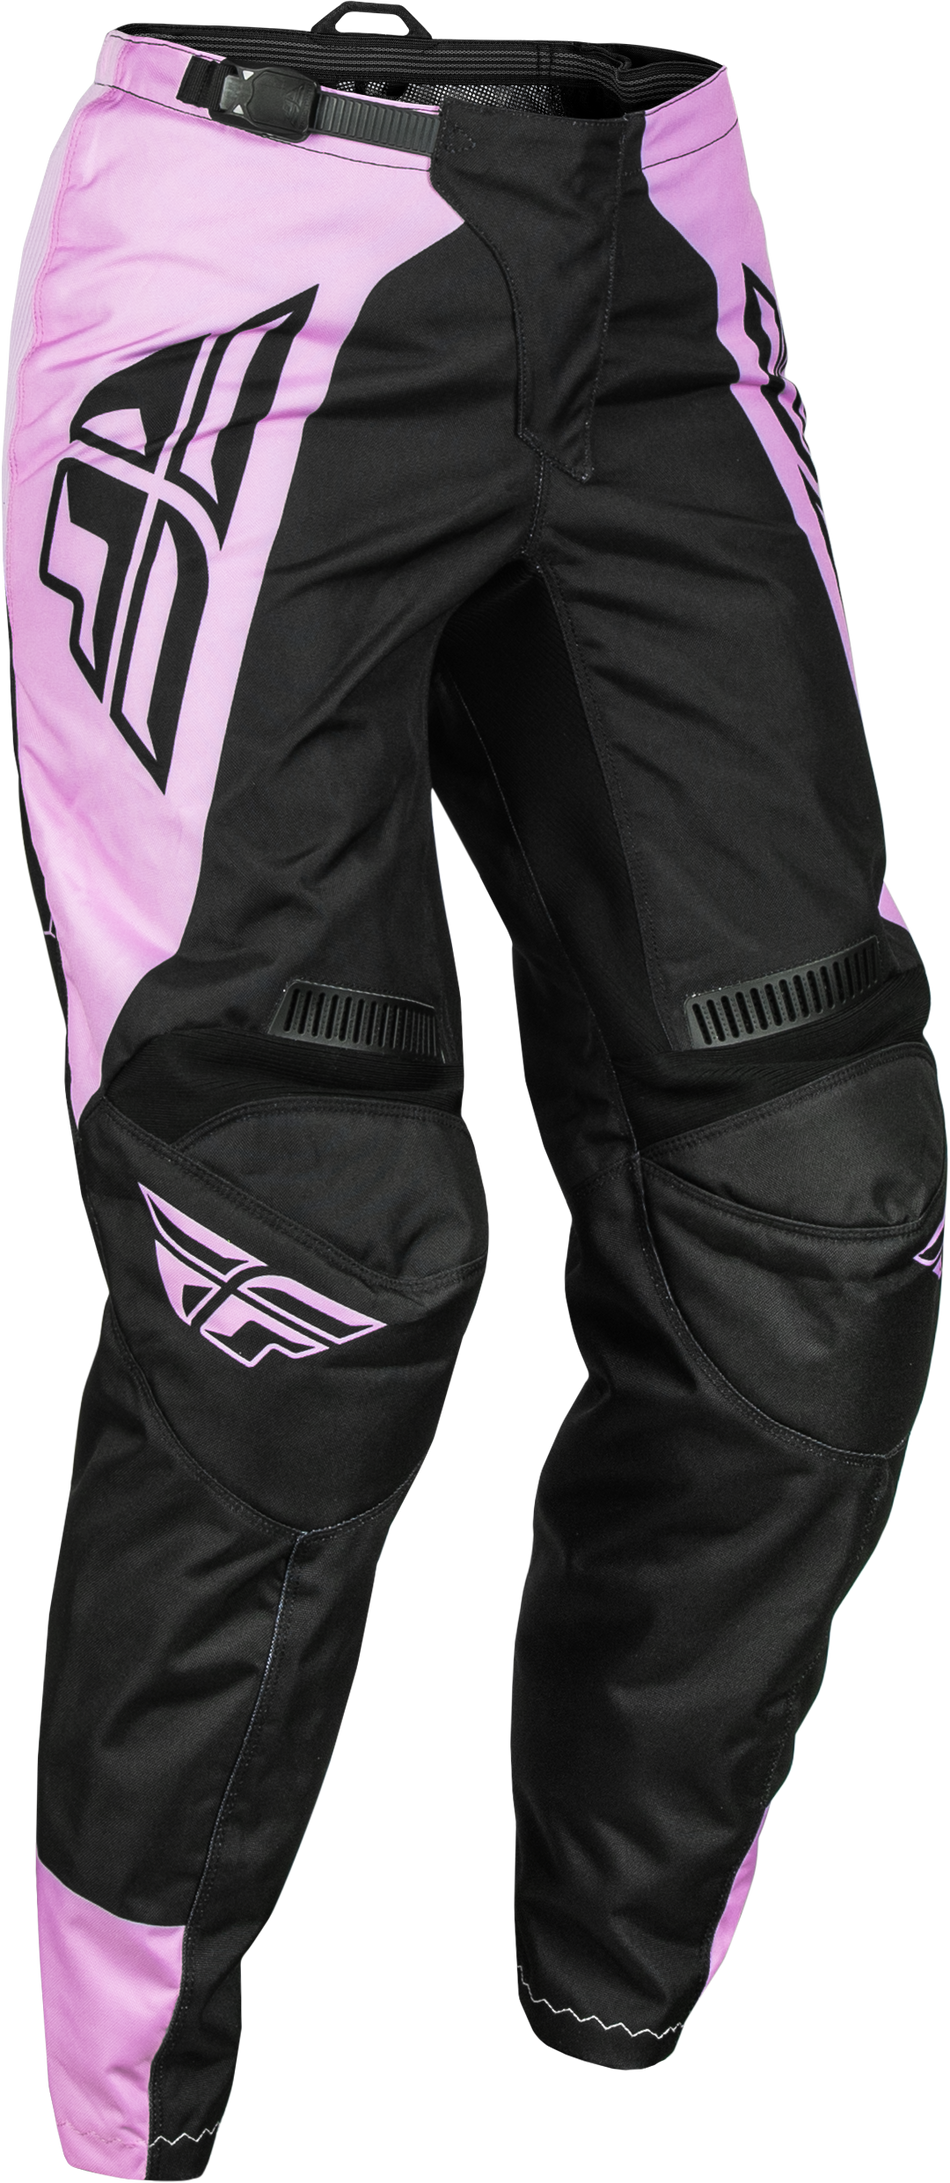 FLY RACING Women's F-16 Pants Black/Lavender Sz 09/10 377-83109